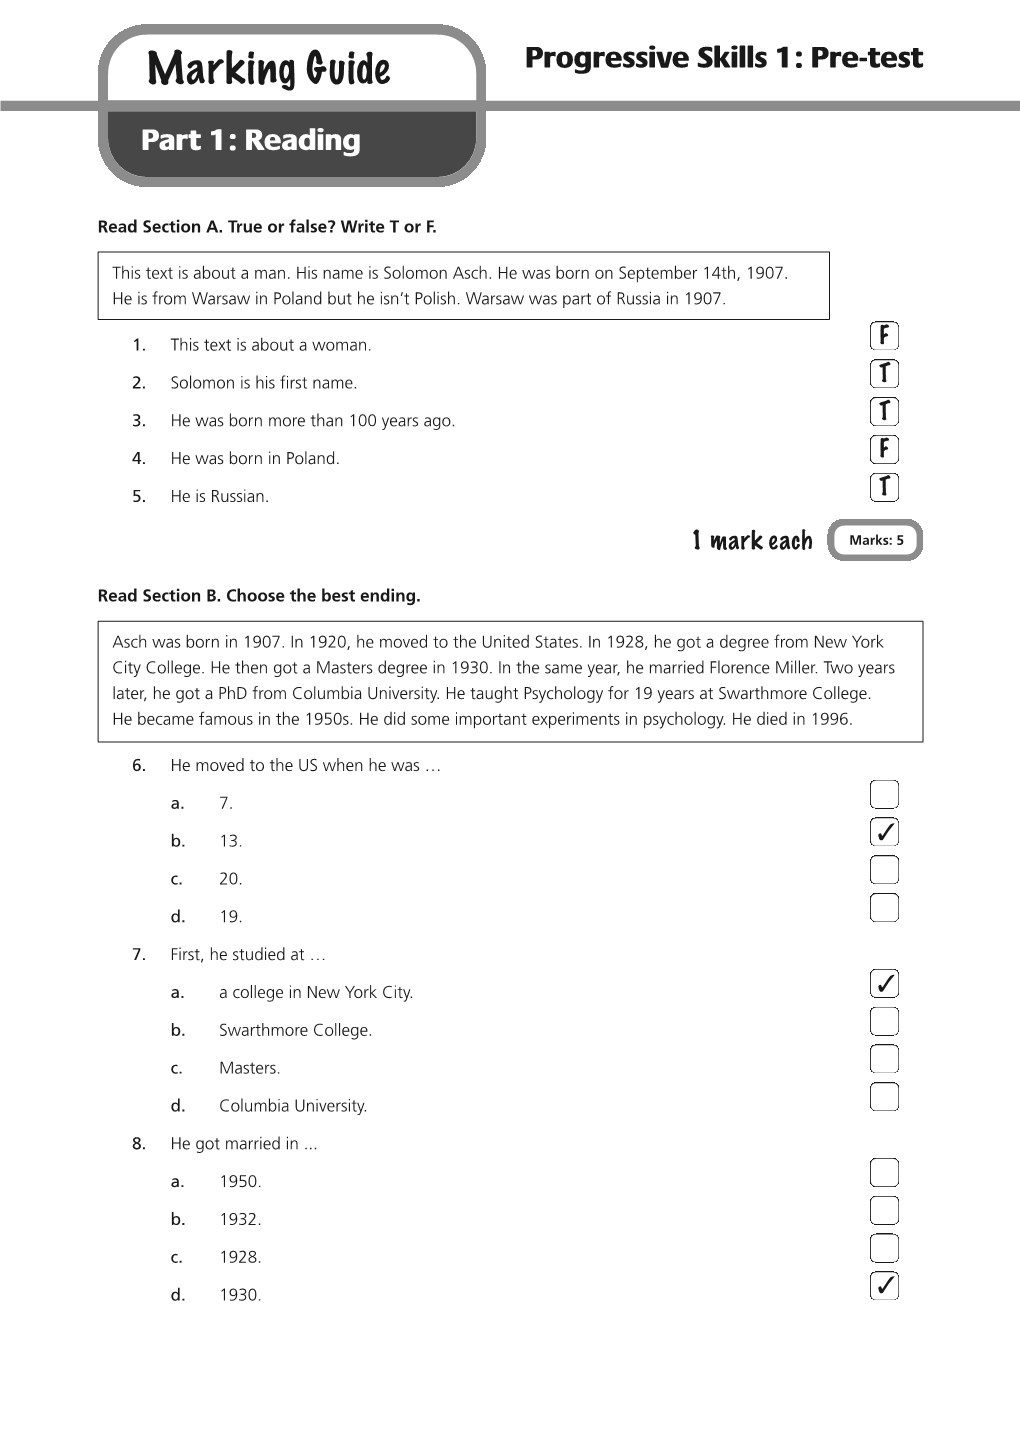 Marking Guide Progressive Skills 1: Pre-Test Part 1: Reading